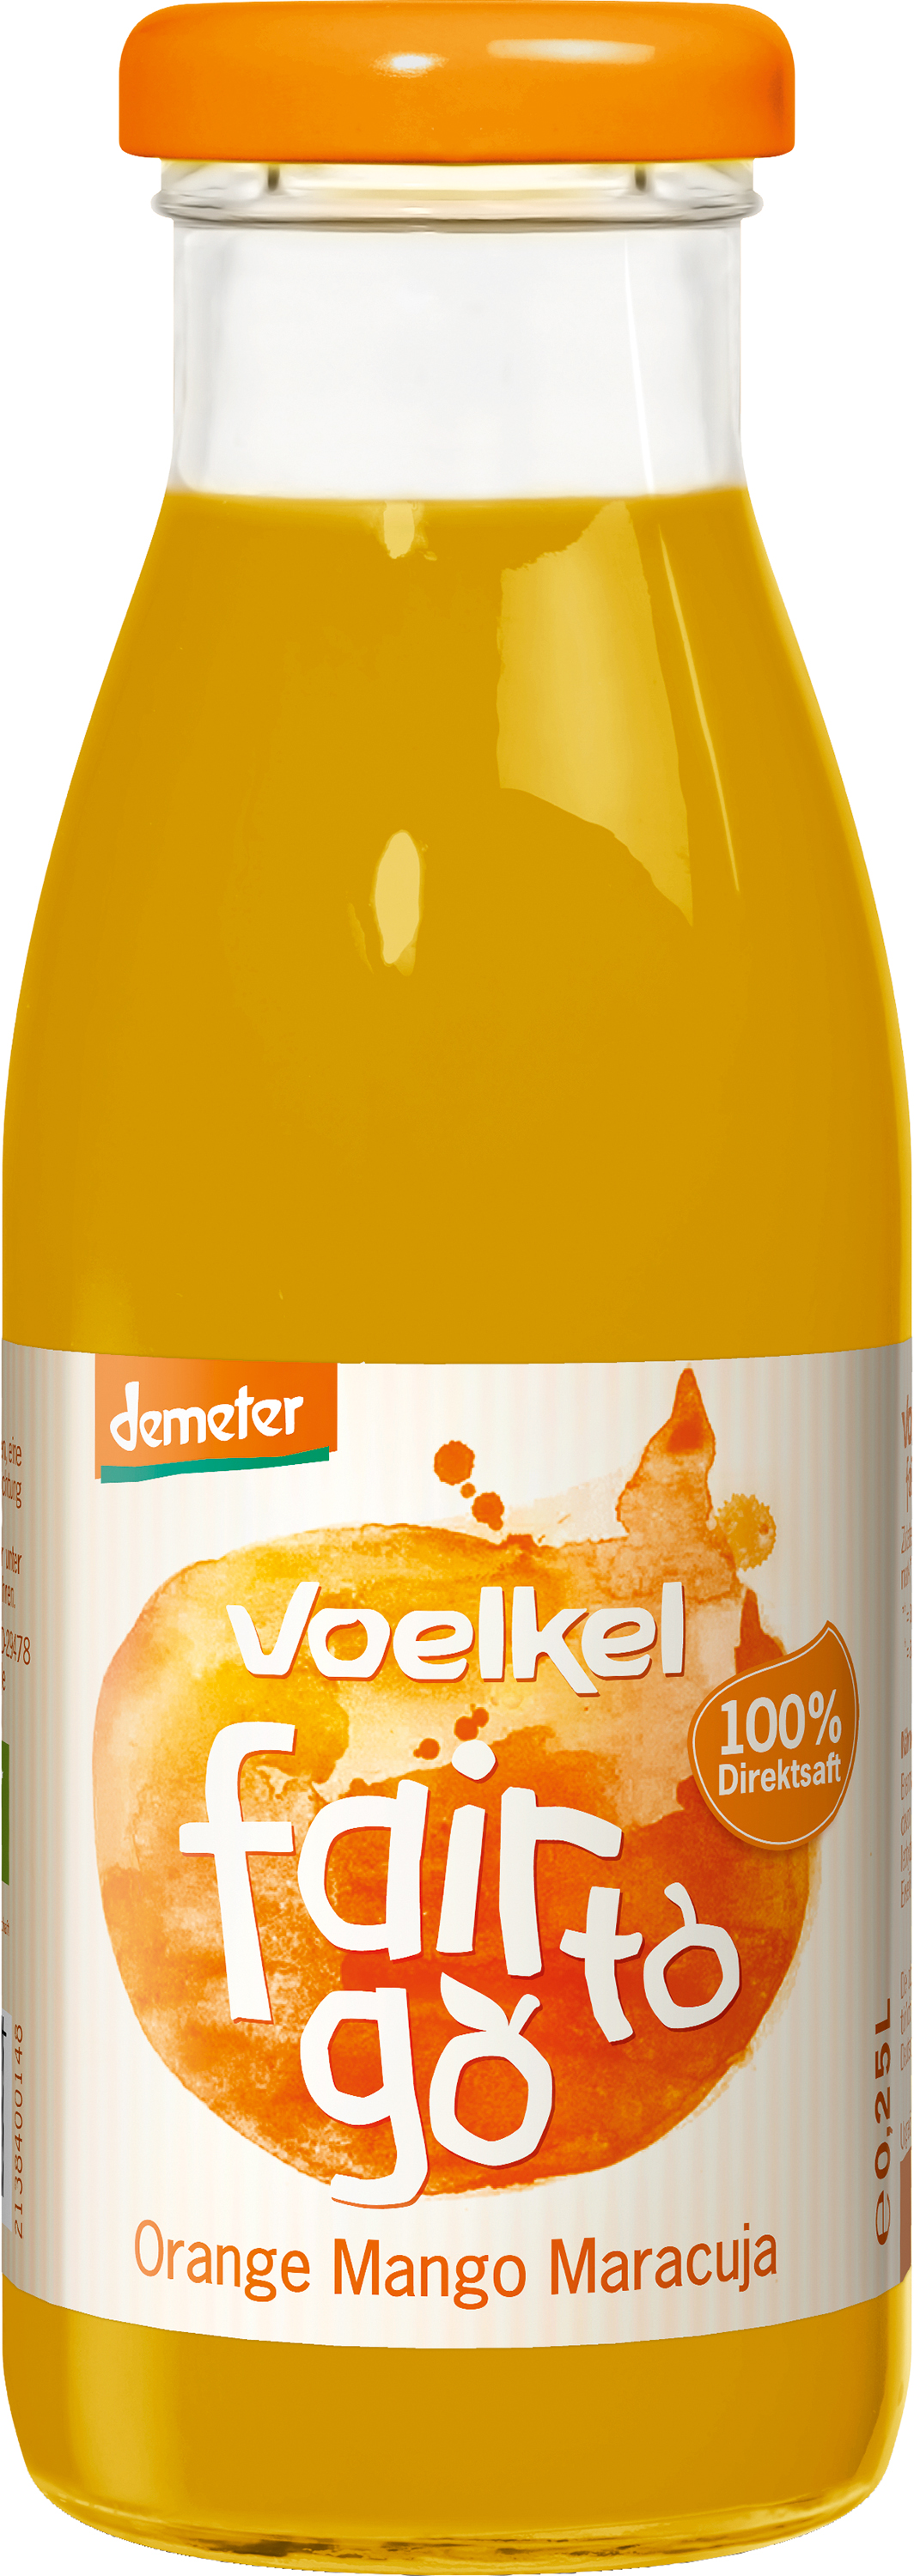 Voelkel fair to go Orange Mango Maracuja 250ml Demeter